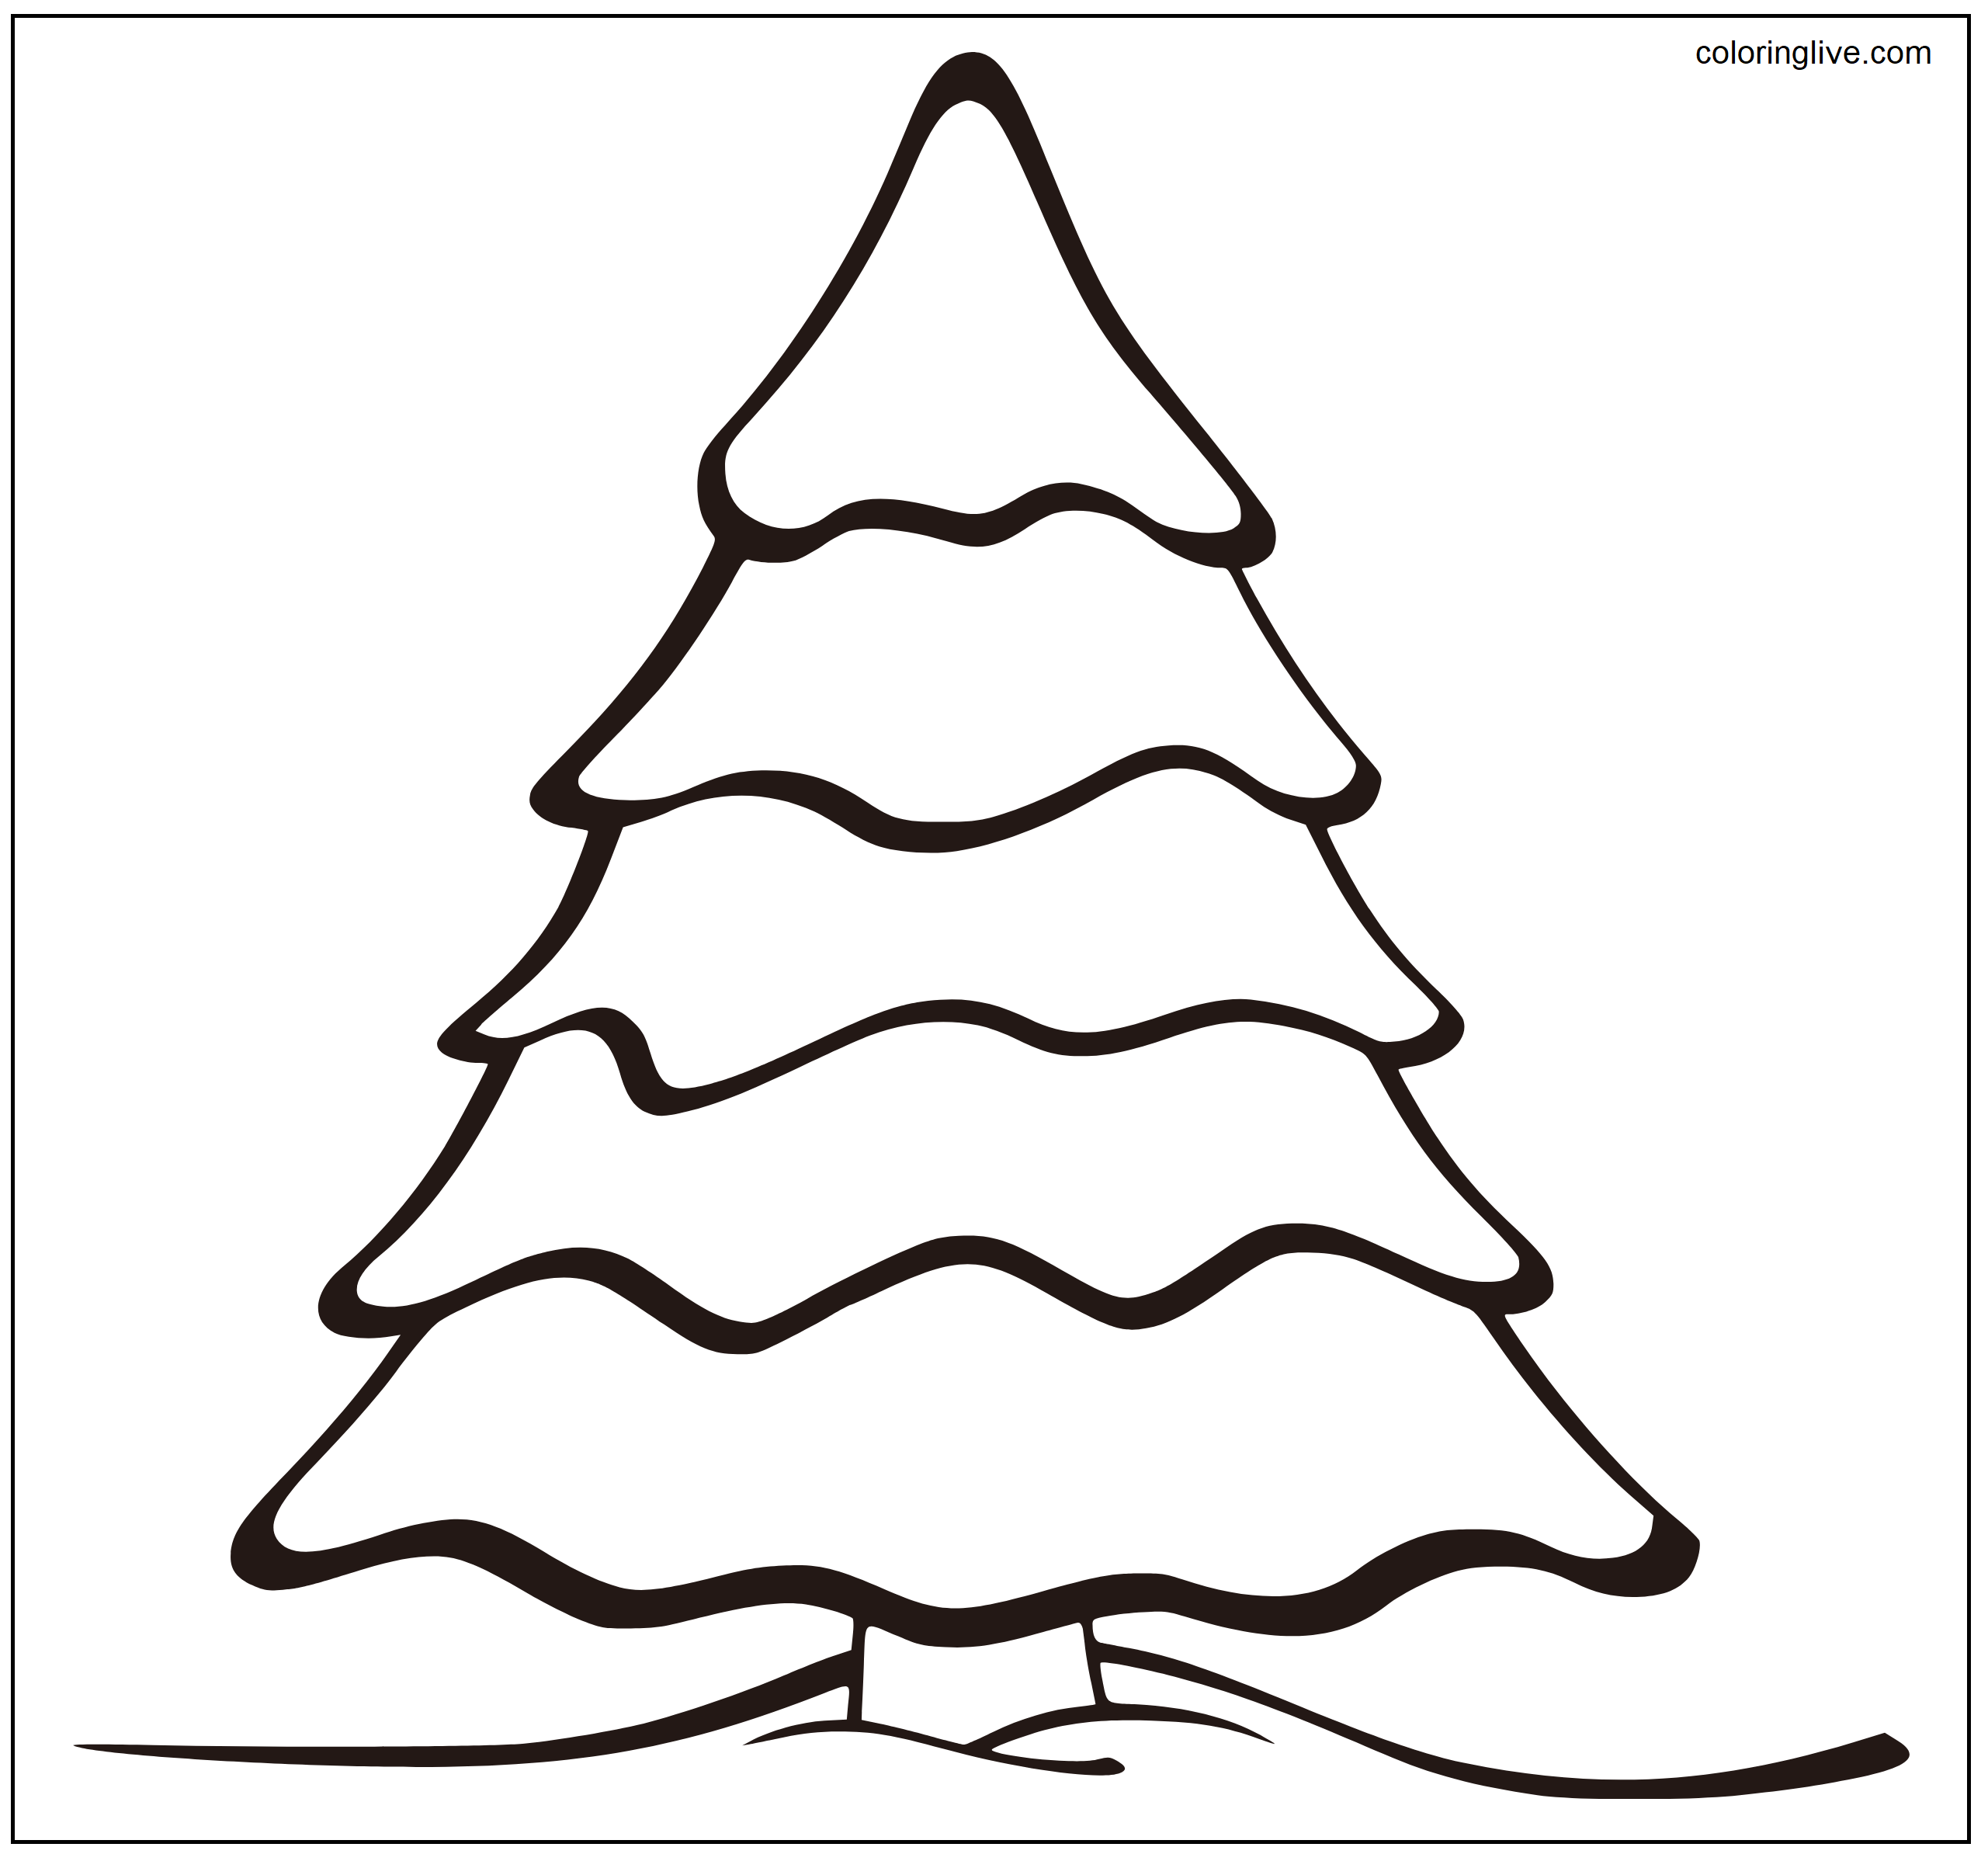 Printable A  christmas tree Coloring Page for kids.